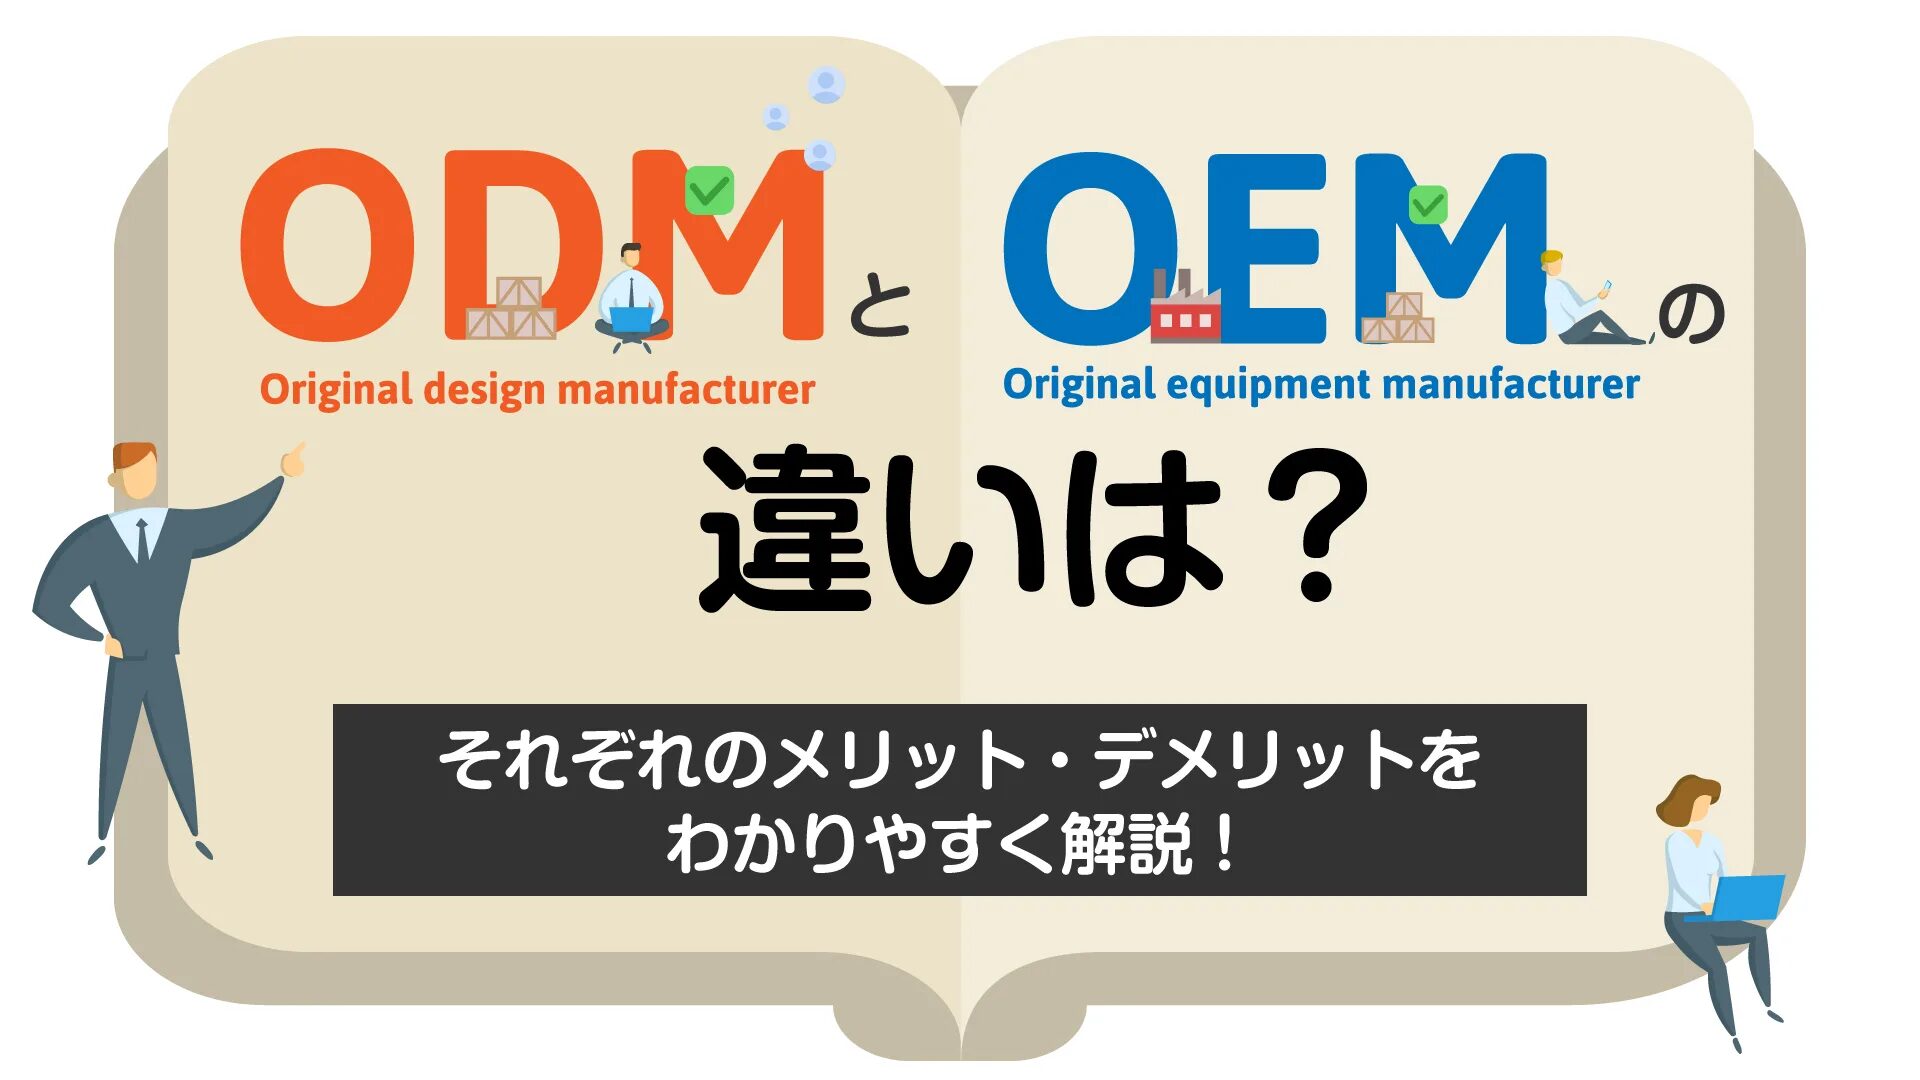 oem-odm-production-choice